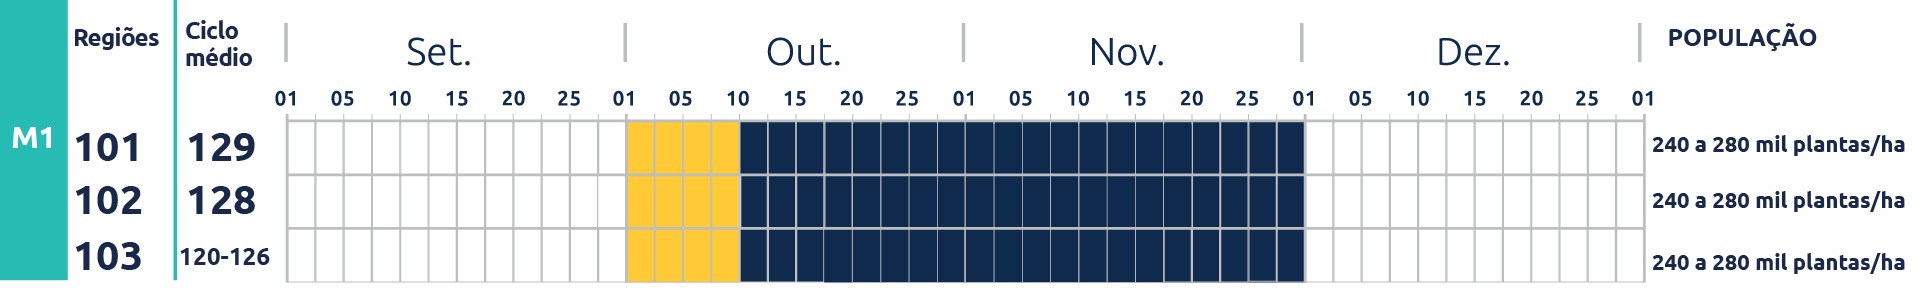 Tabela do cultivar NS 5922 IPRO